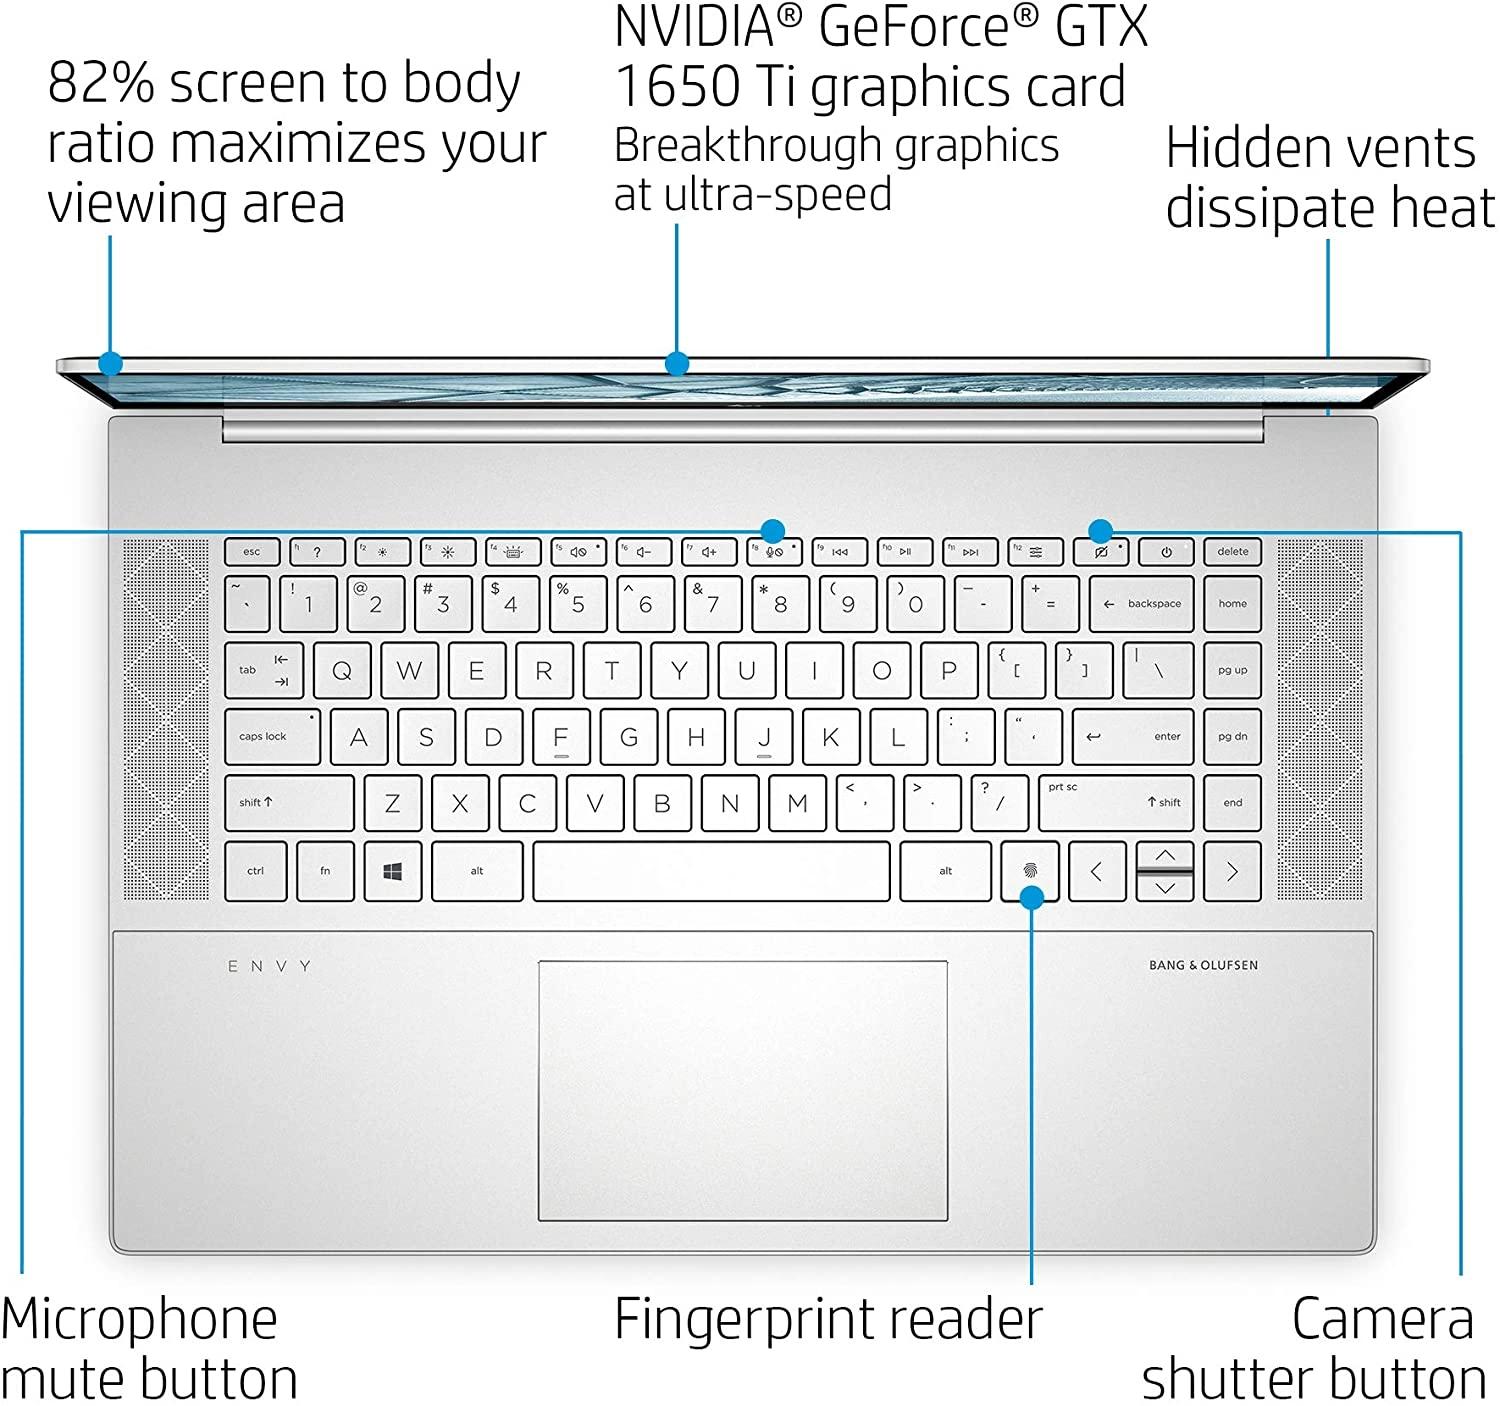 HP Envy 15 Laptop laptop image